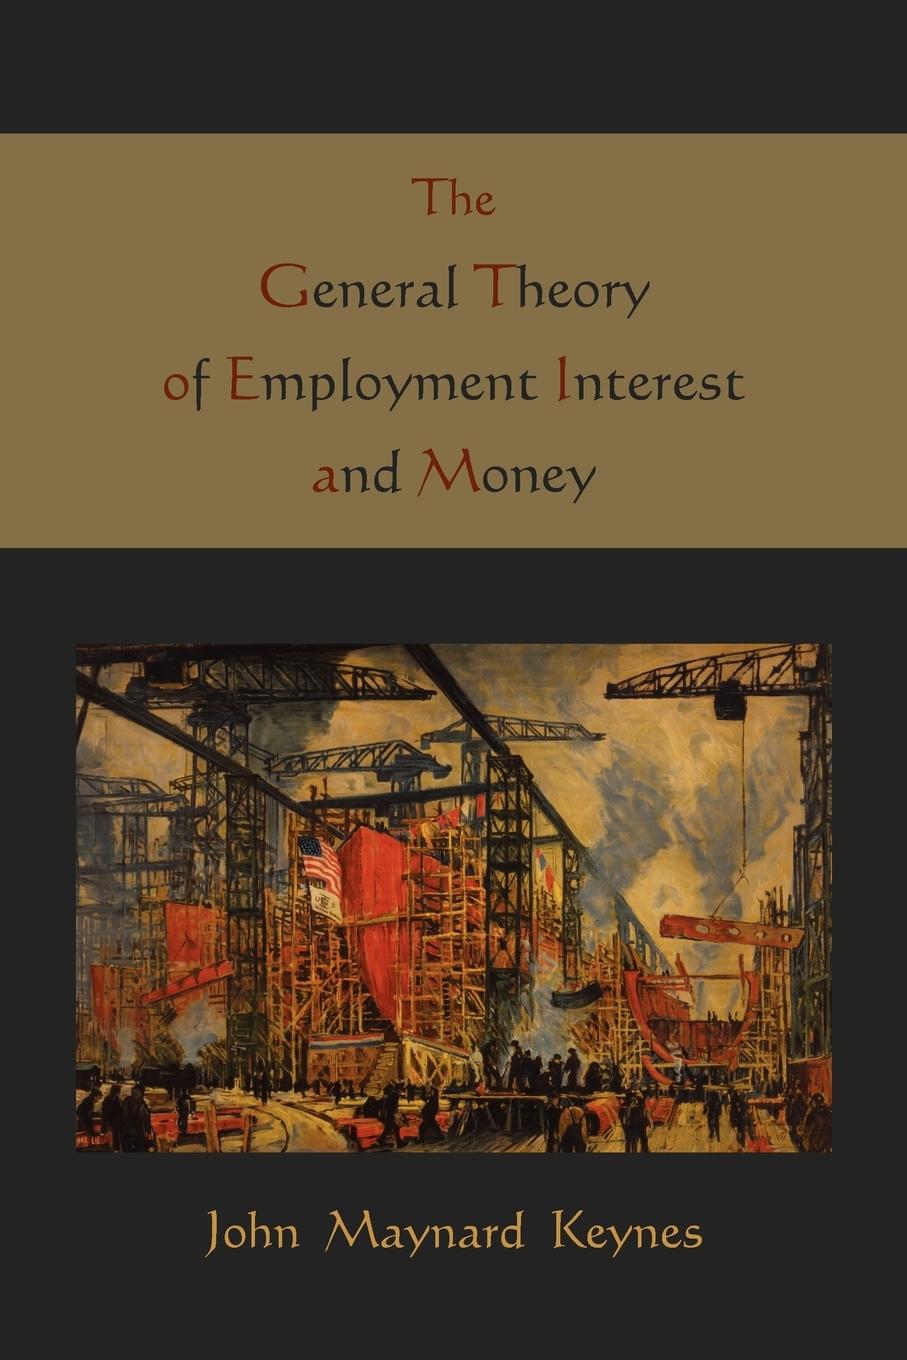 The General Theory of Employment Interest and Money - Keynes, Maynard John|Keynes, John Maynard